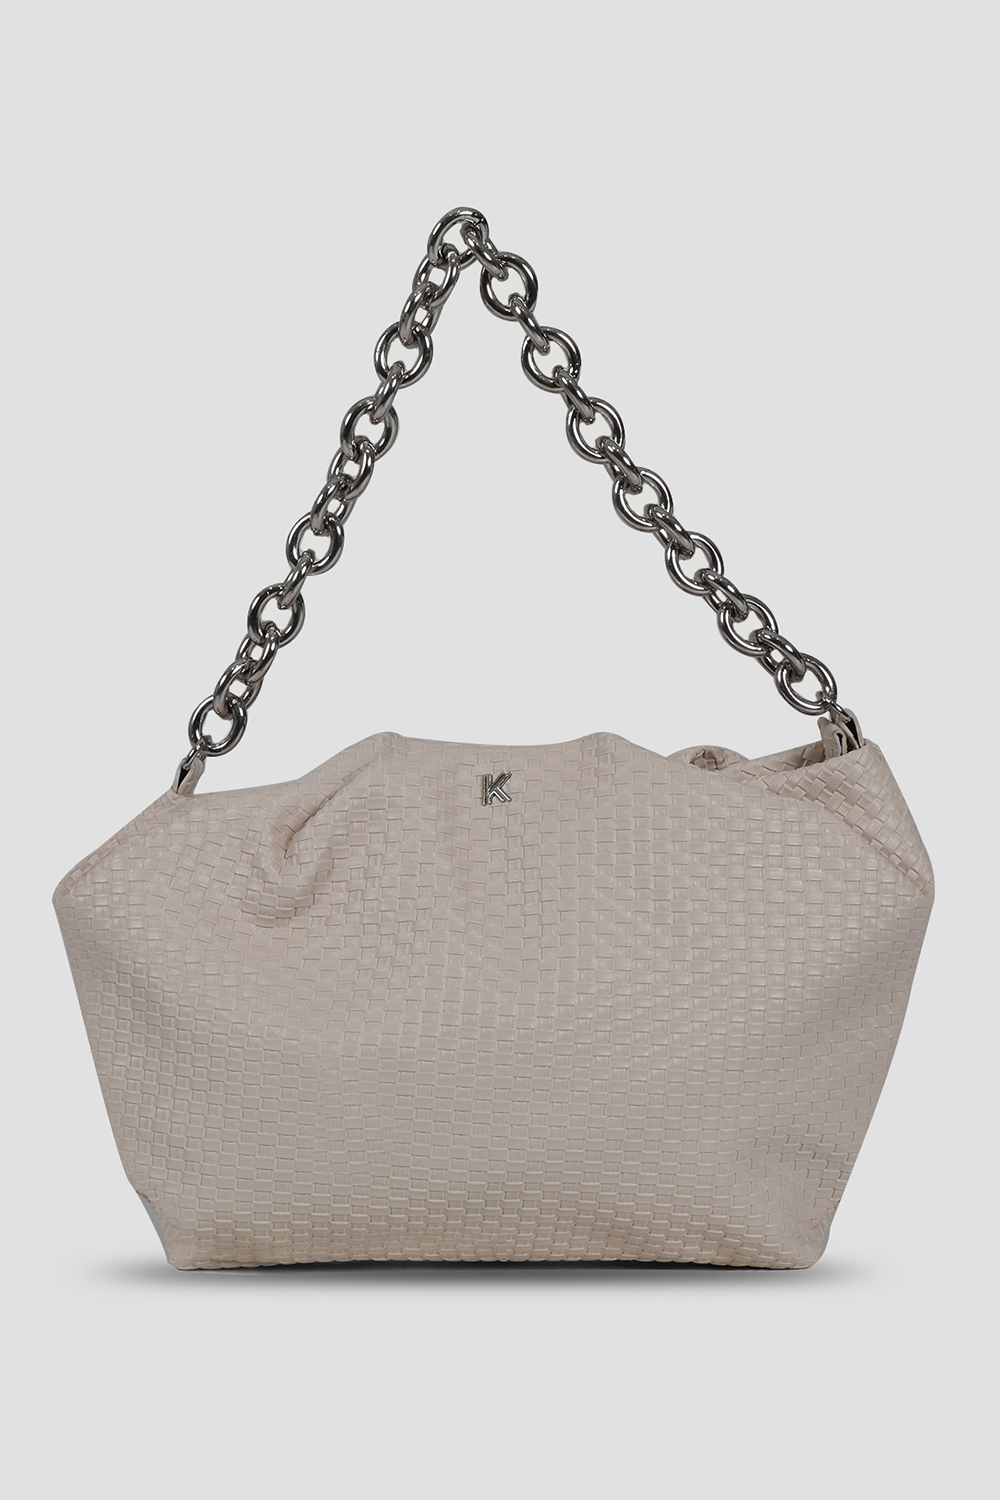 KENDALL + KYLIE – Γυναικεία τσάντα ώμου KENDALL + KYLIE μπεζ 1825913.0-0090